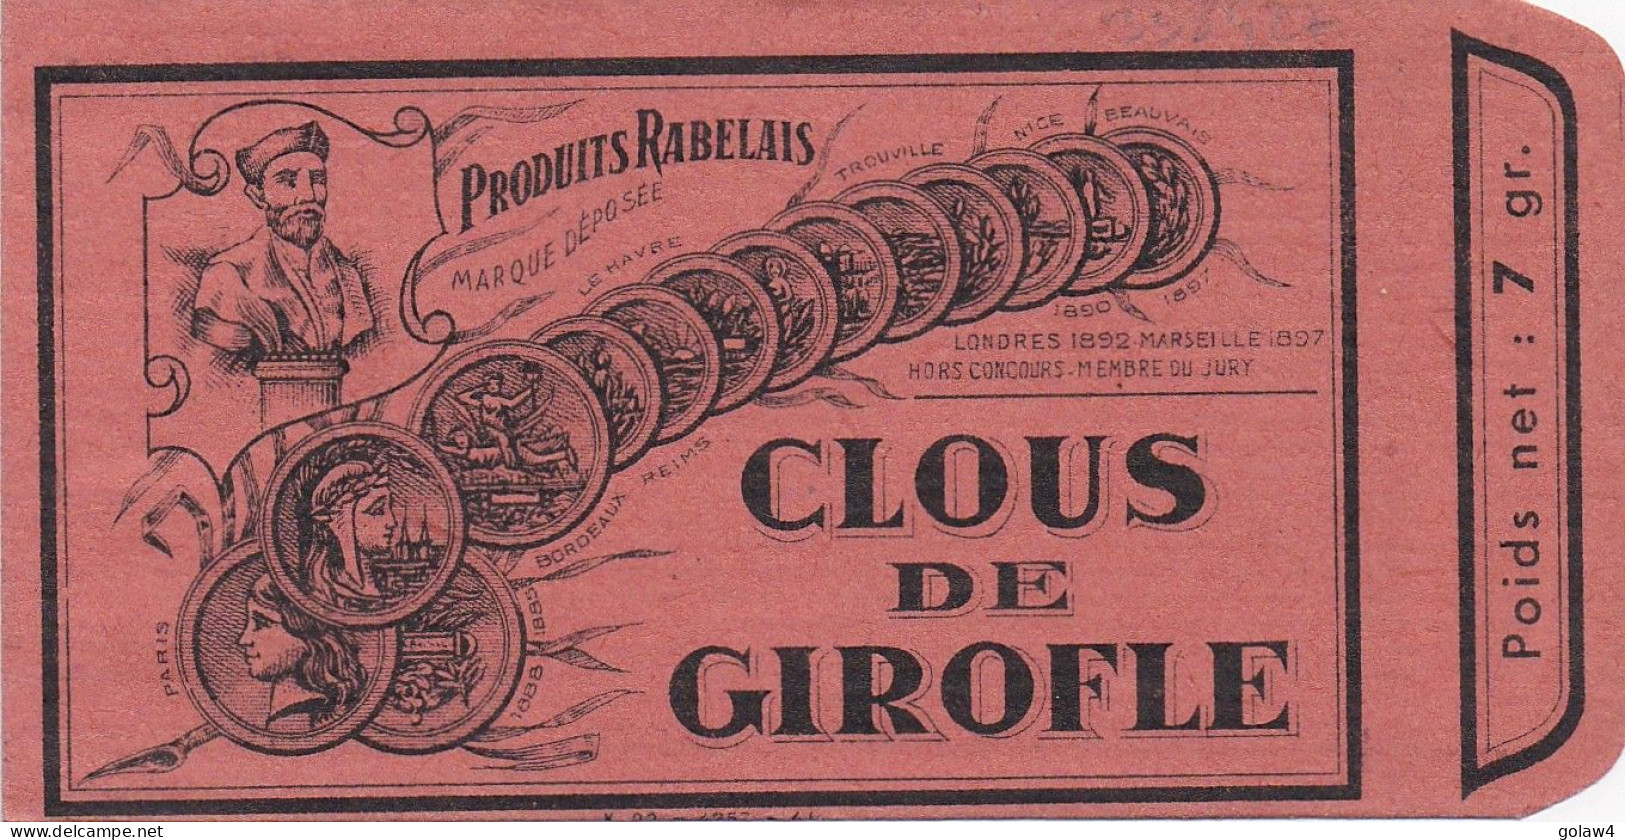 33842# SACHET CLOUS DE GIROFLE PRODUITS RABELAIS POIDS NET 7 Gr EPICE - Supplies And Equipment